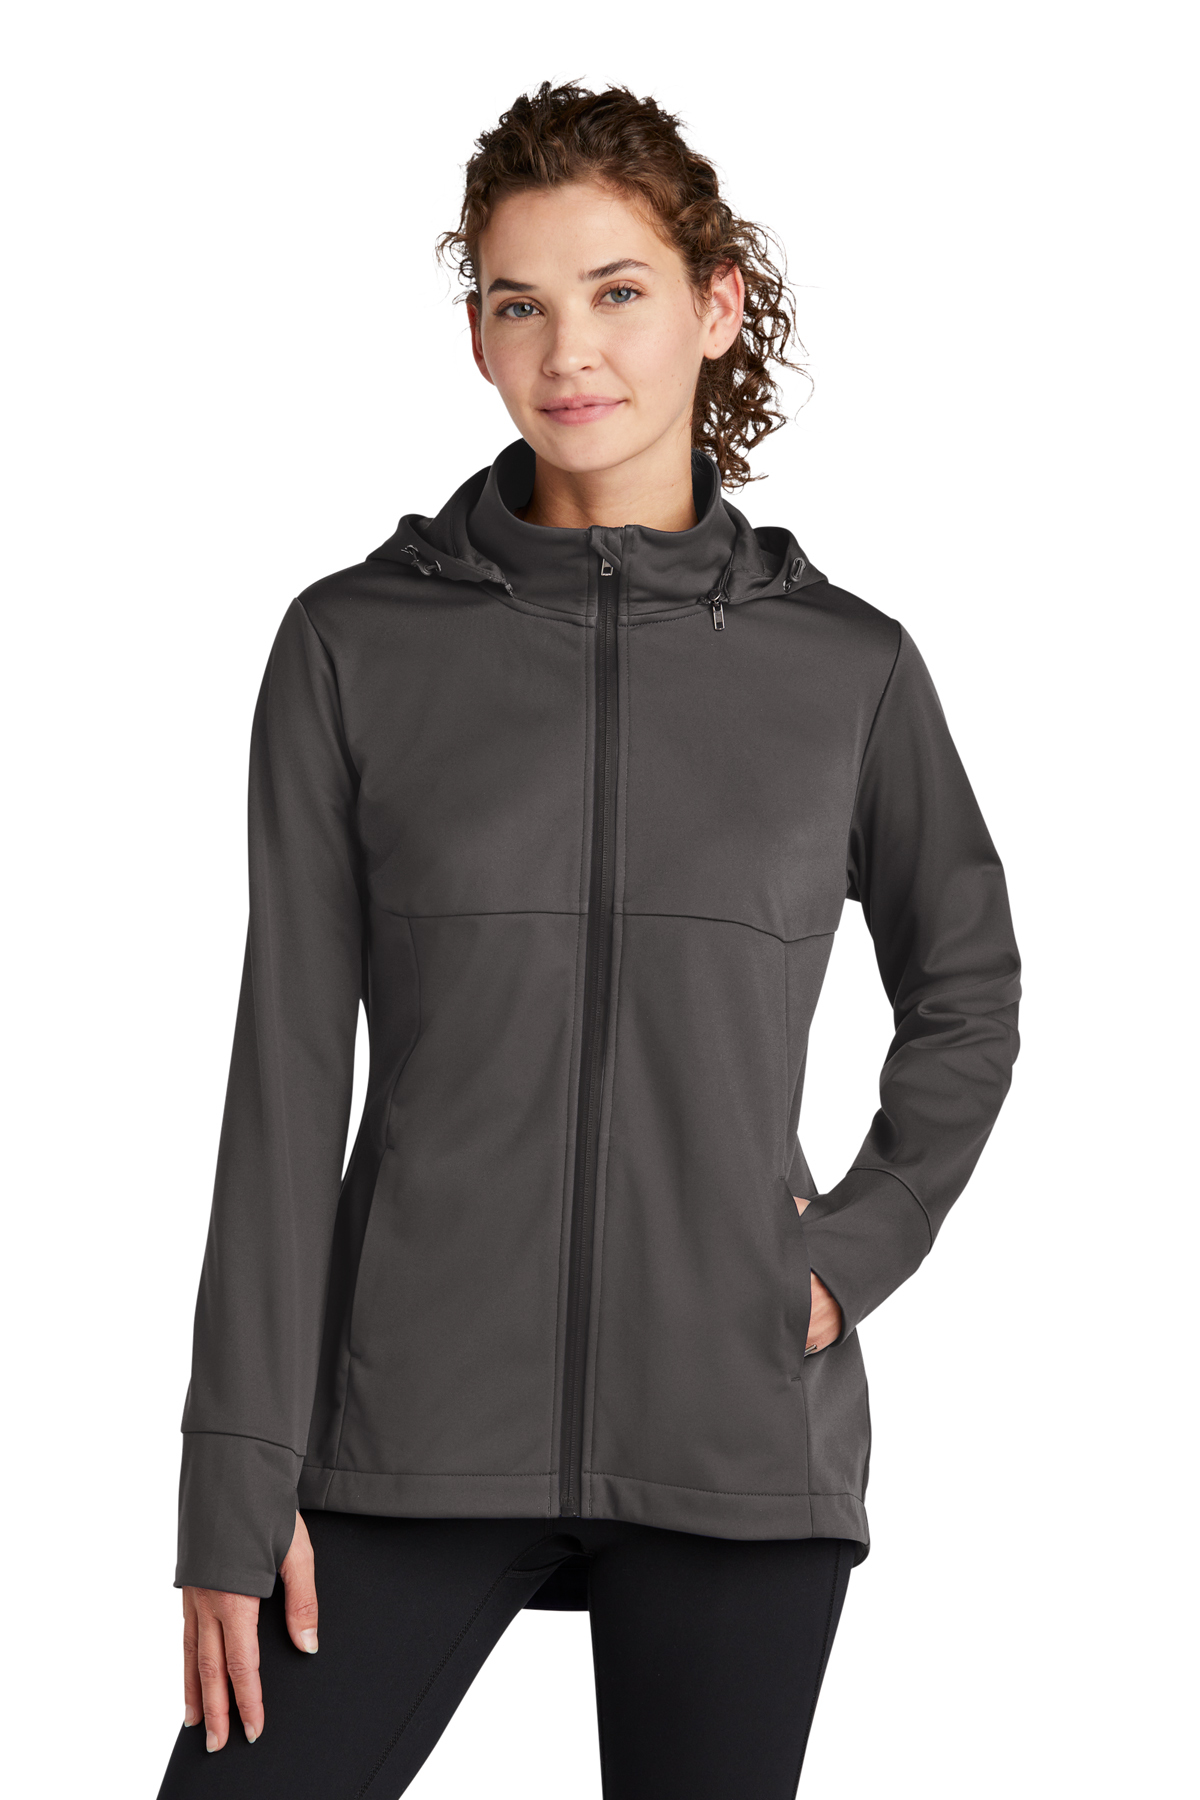 Sport-Tek Ladies Hooded Soft Shell Jacket | Product | Sport-Tek